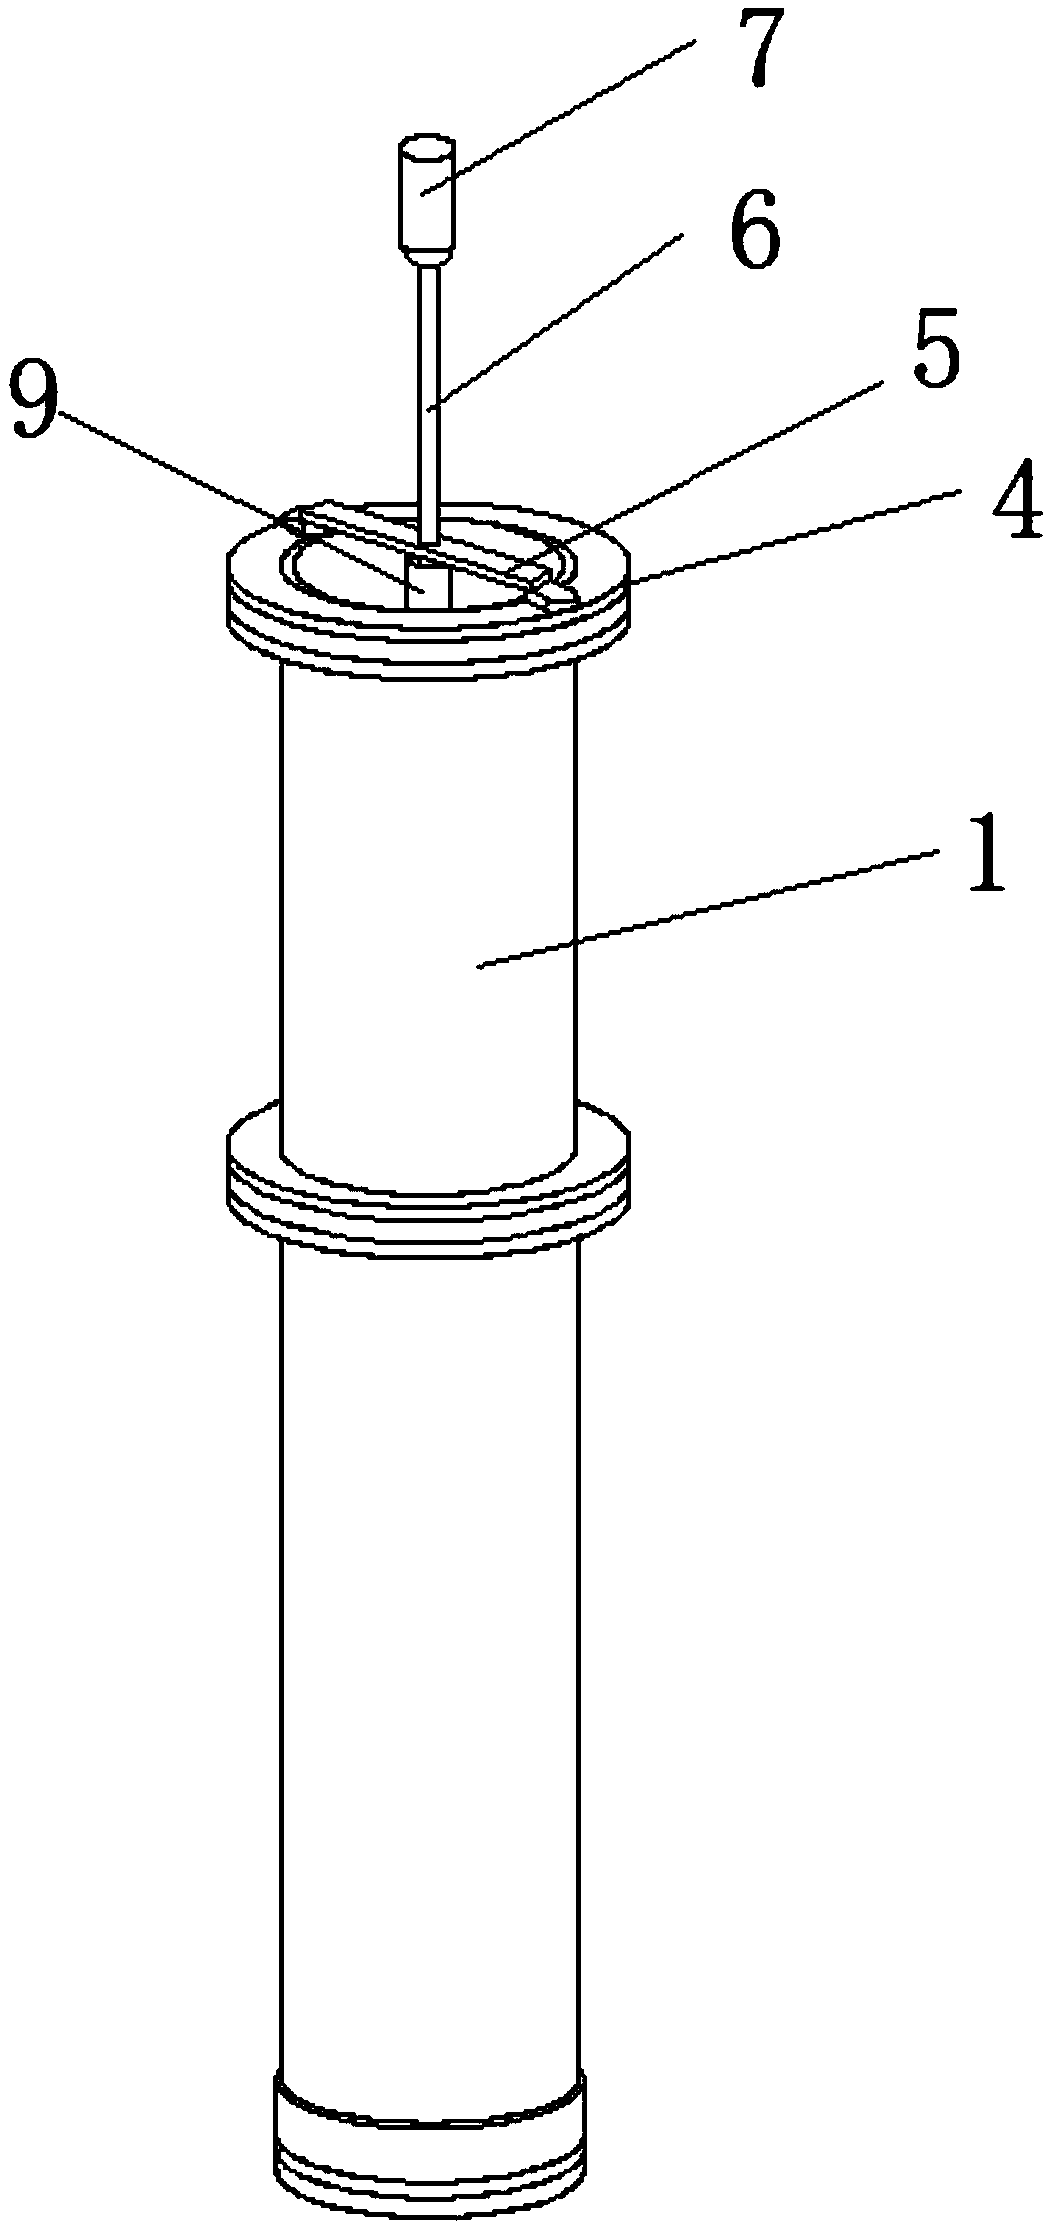 Quartz feeding barrel with repeated feeding functions for single crystal furnace